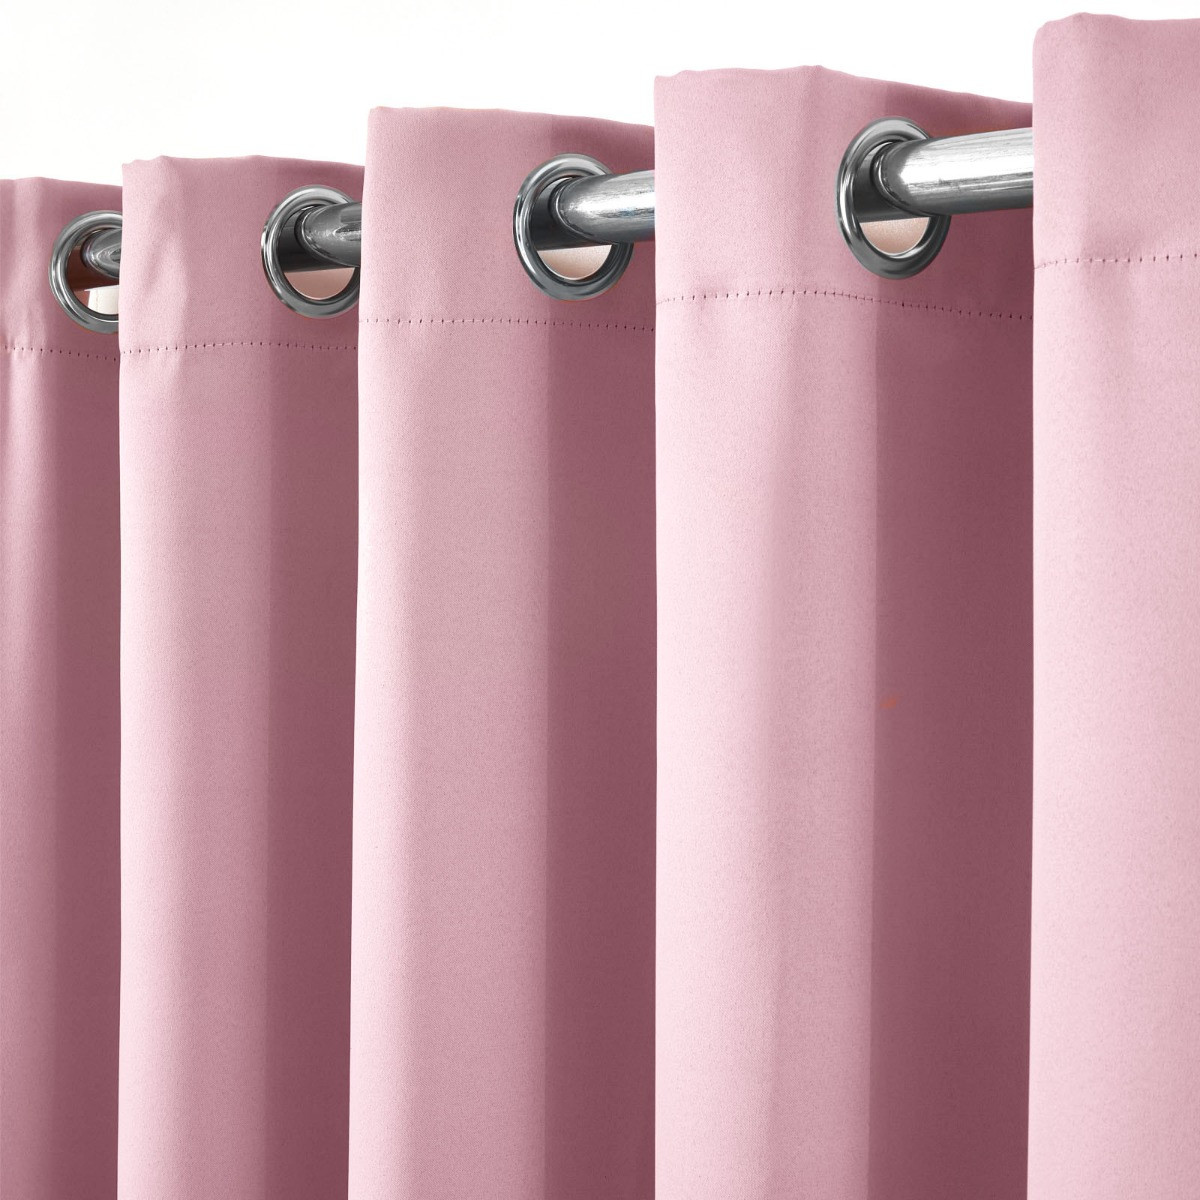 Dreamscene Eyelet Blackout Curtains, Pink - 168 x 228cm (66" x 90")>